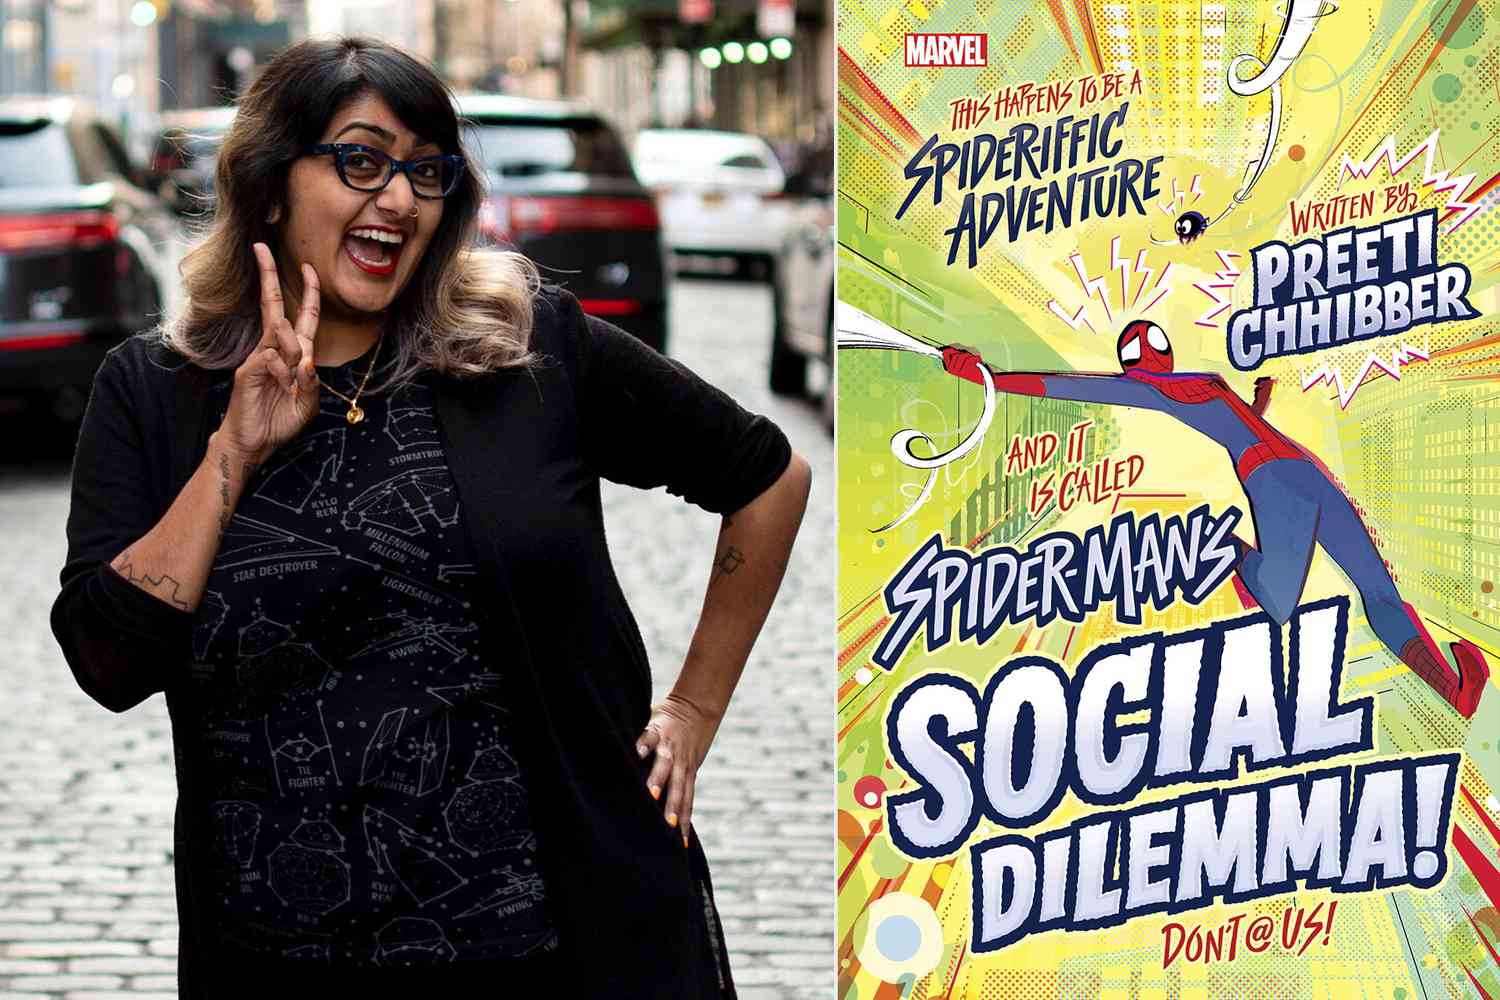 Spiderman's Social Dilemma by Preeti Chhibber